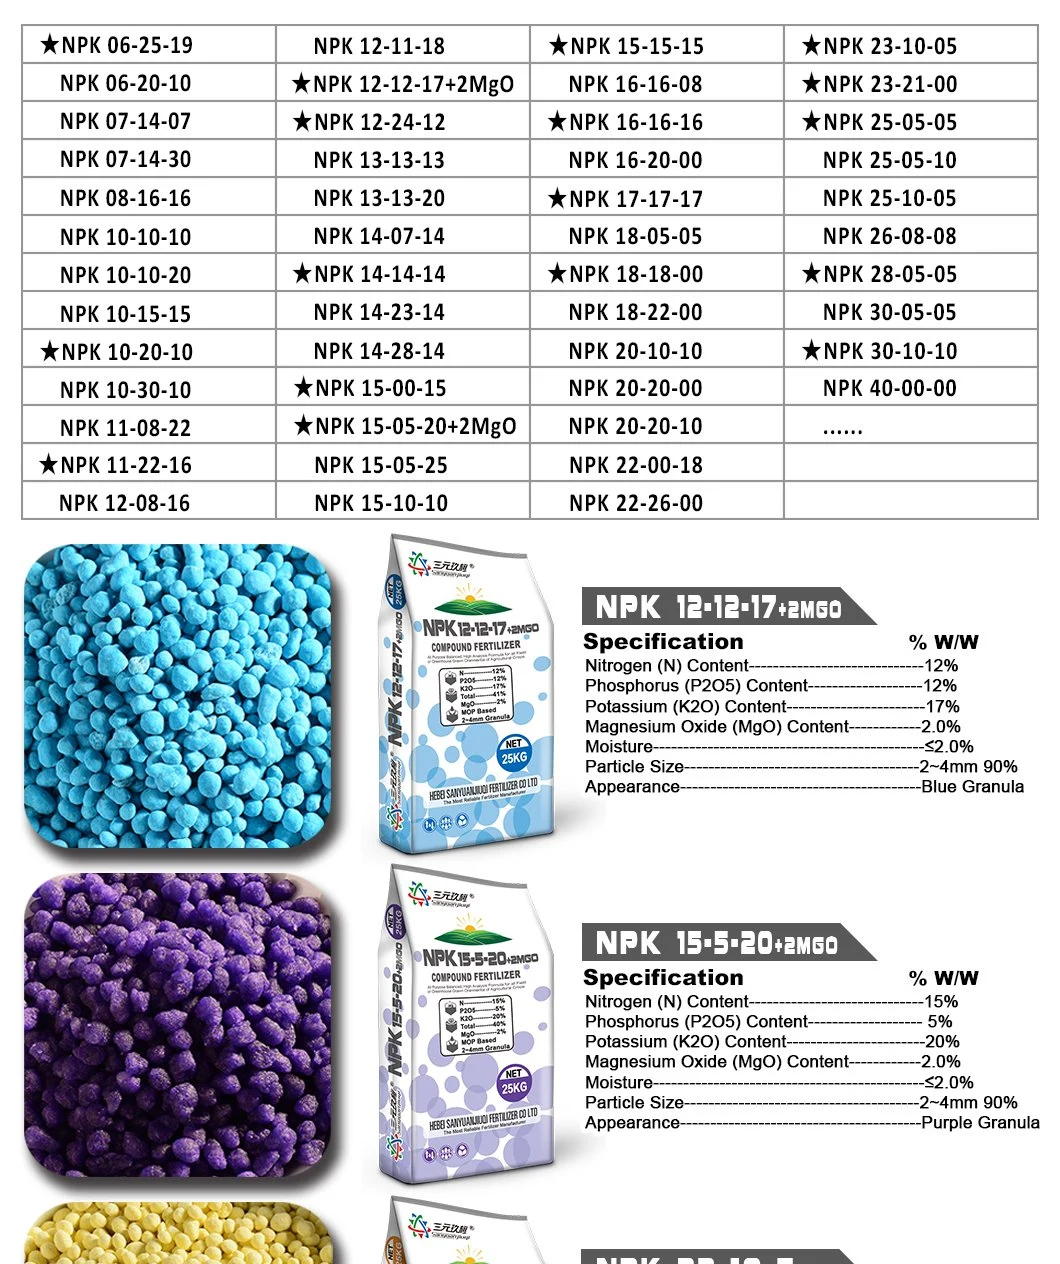 Topdressed Nitrogen Fertilizer Compound Fertilizer NPK 28-05-05 Cholr-Low Formula